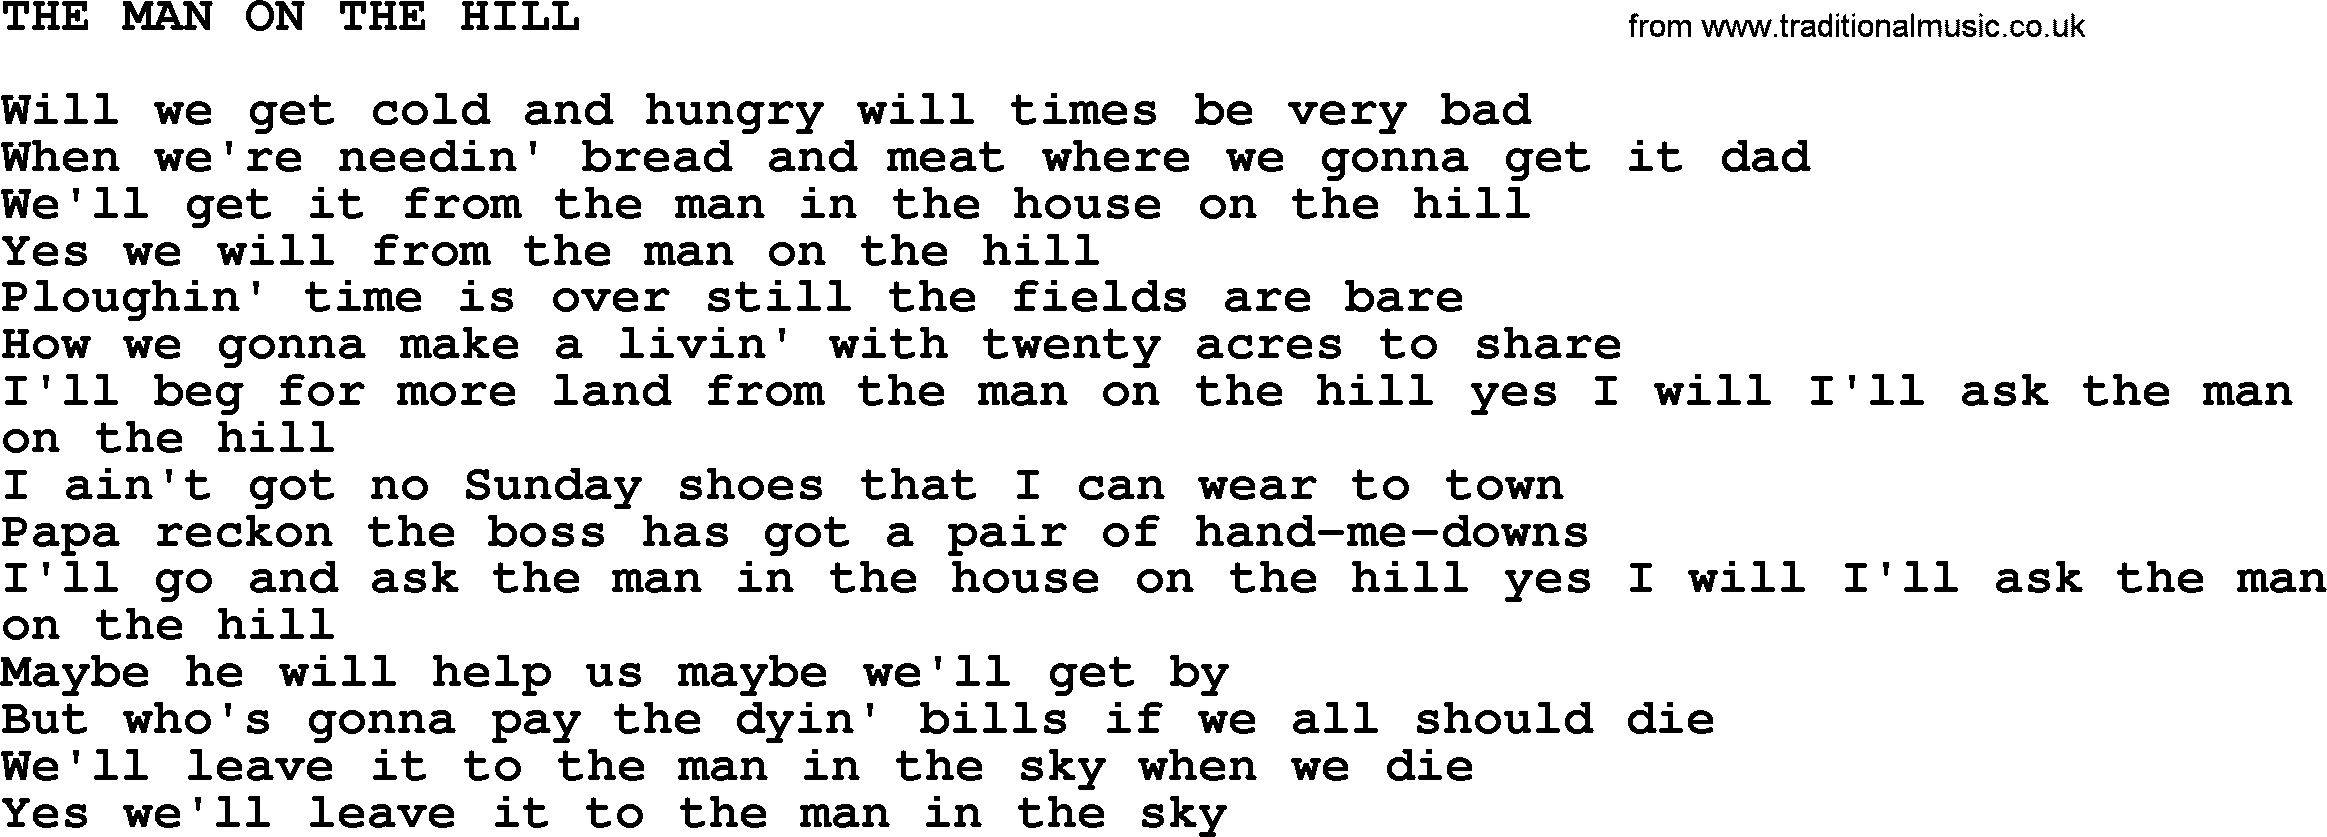 Johnny Cash song The Man On The Hill.txt lyrics